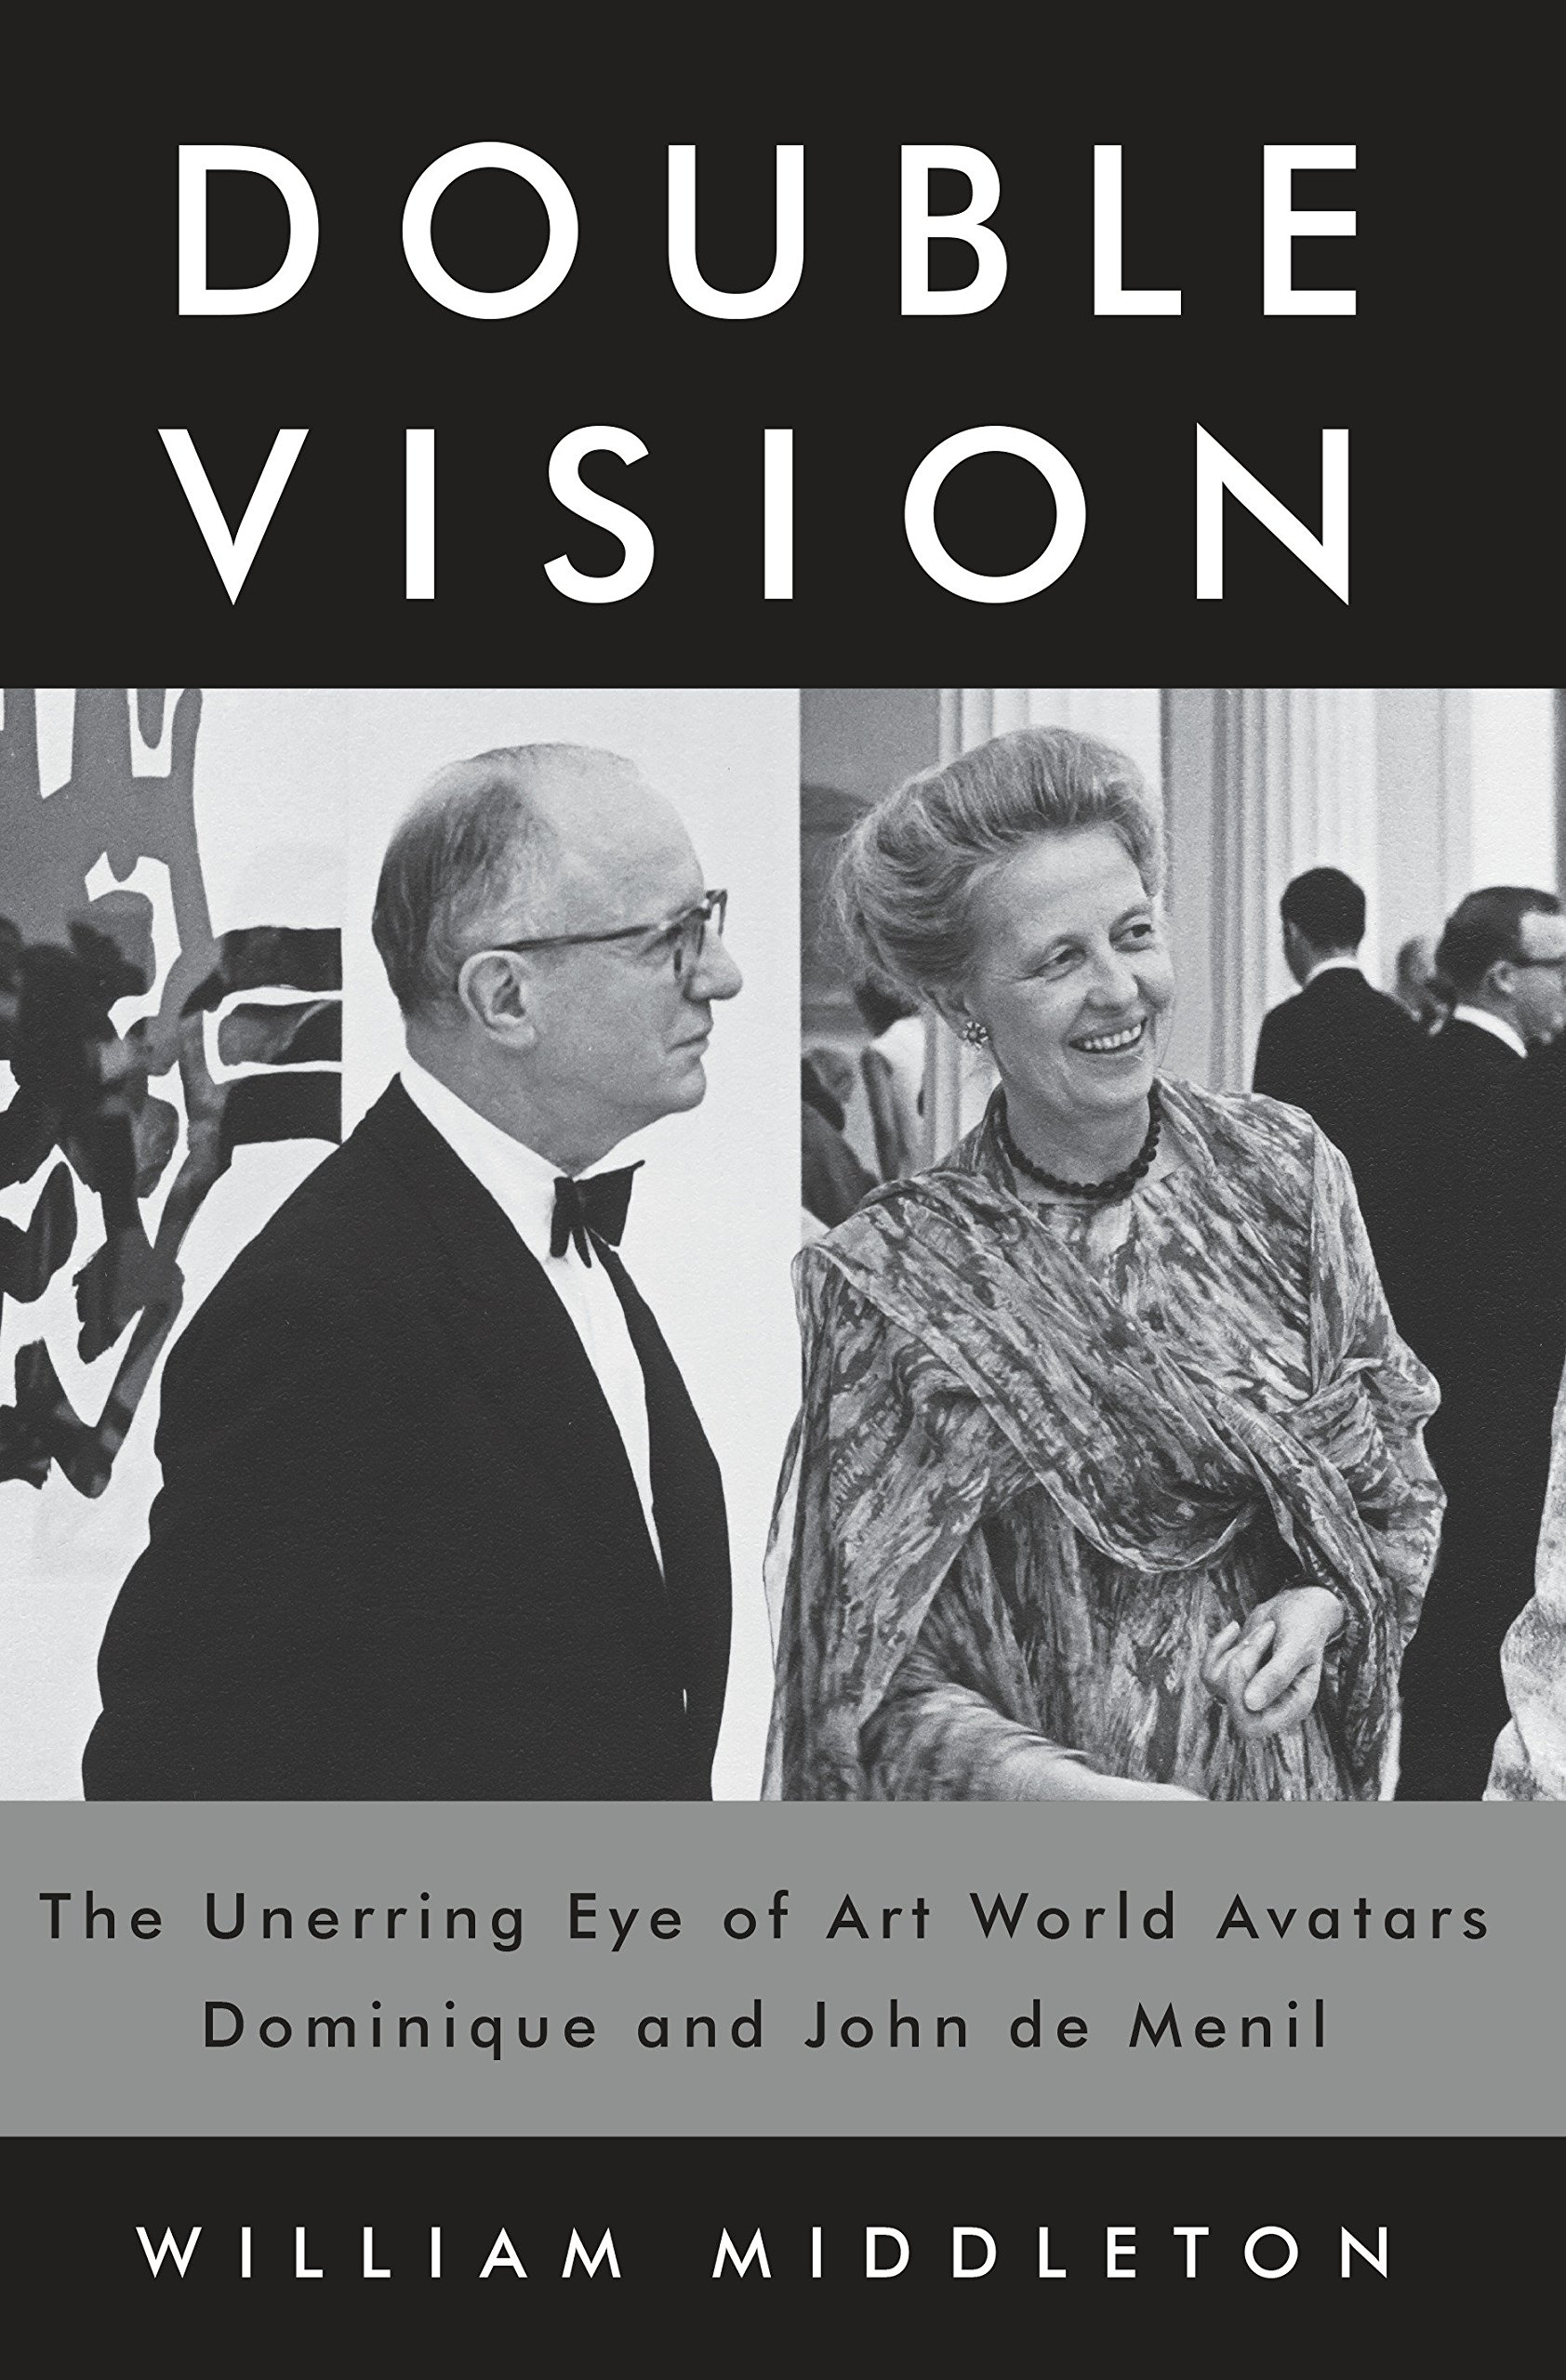 Double Vision: The Unerring Eye of Art World Avatars Dominique and John de Menil